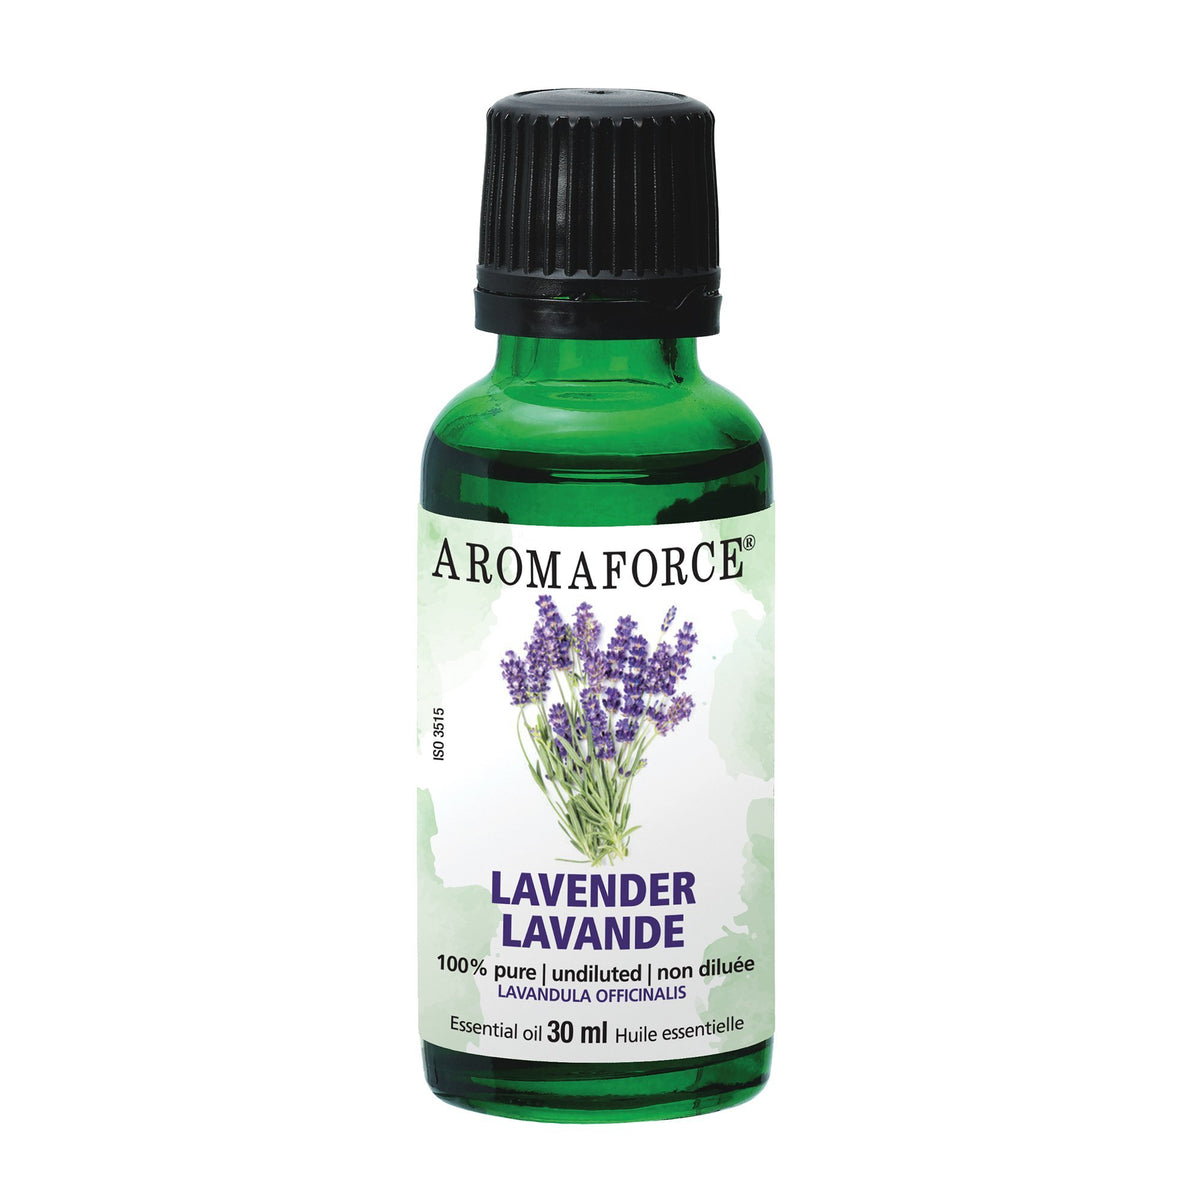 Aromaforce Lavender Essential Oil 30mL - A.Vogel Canada